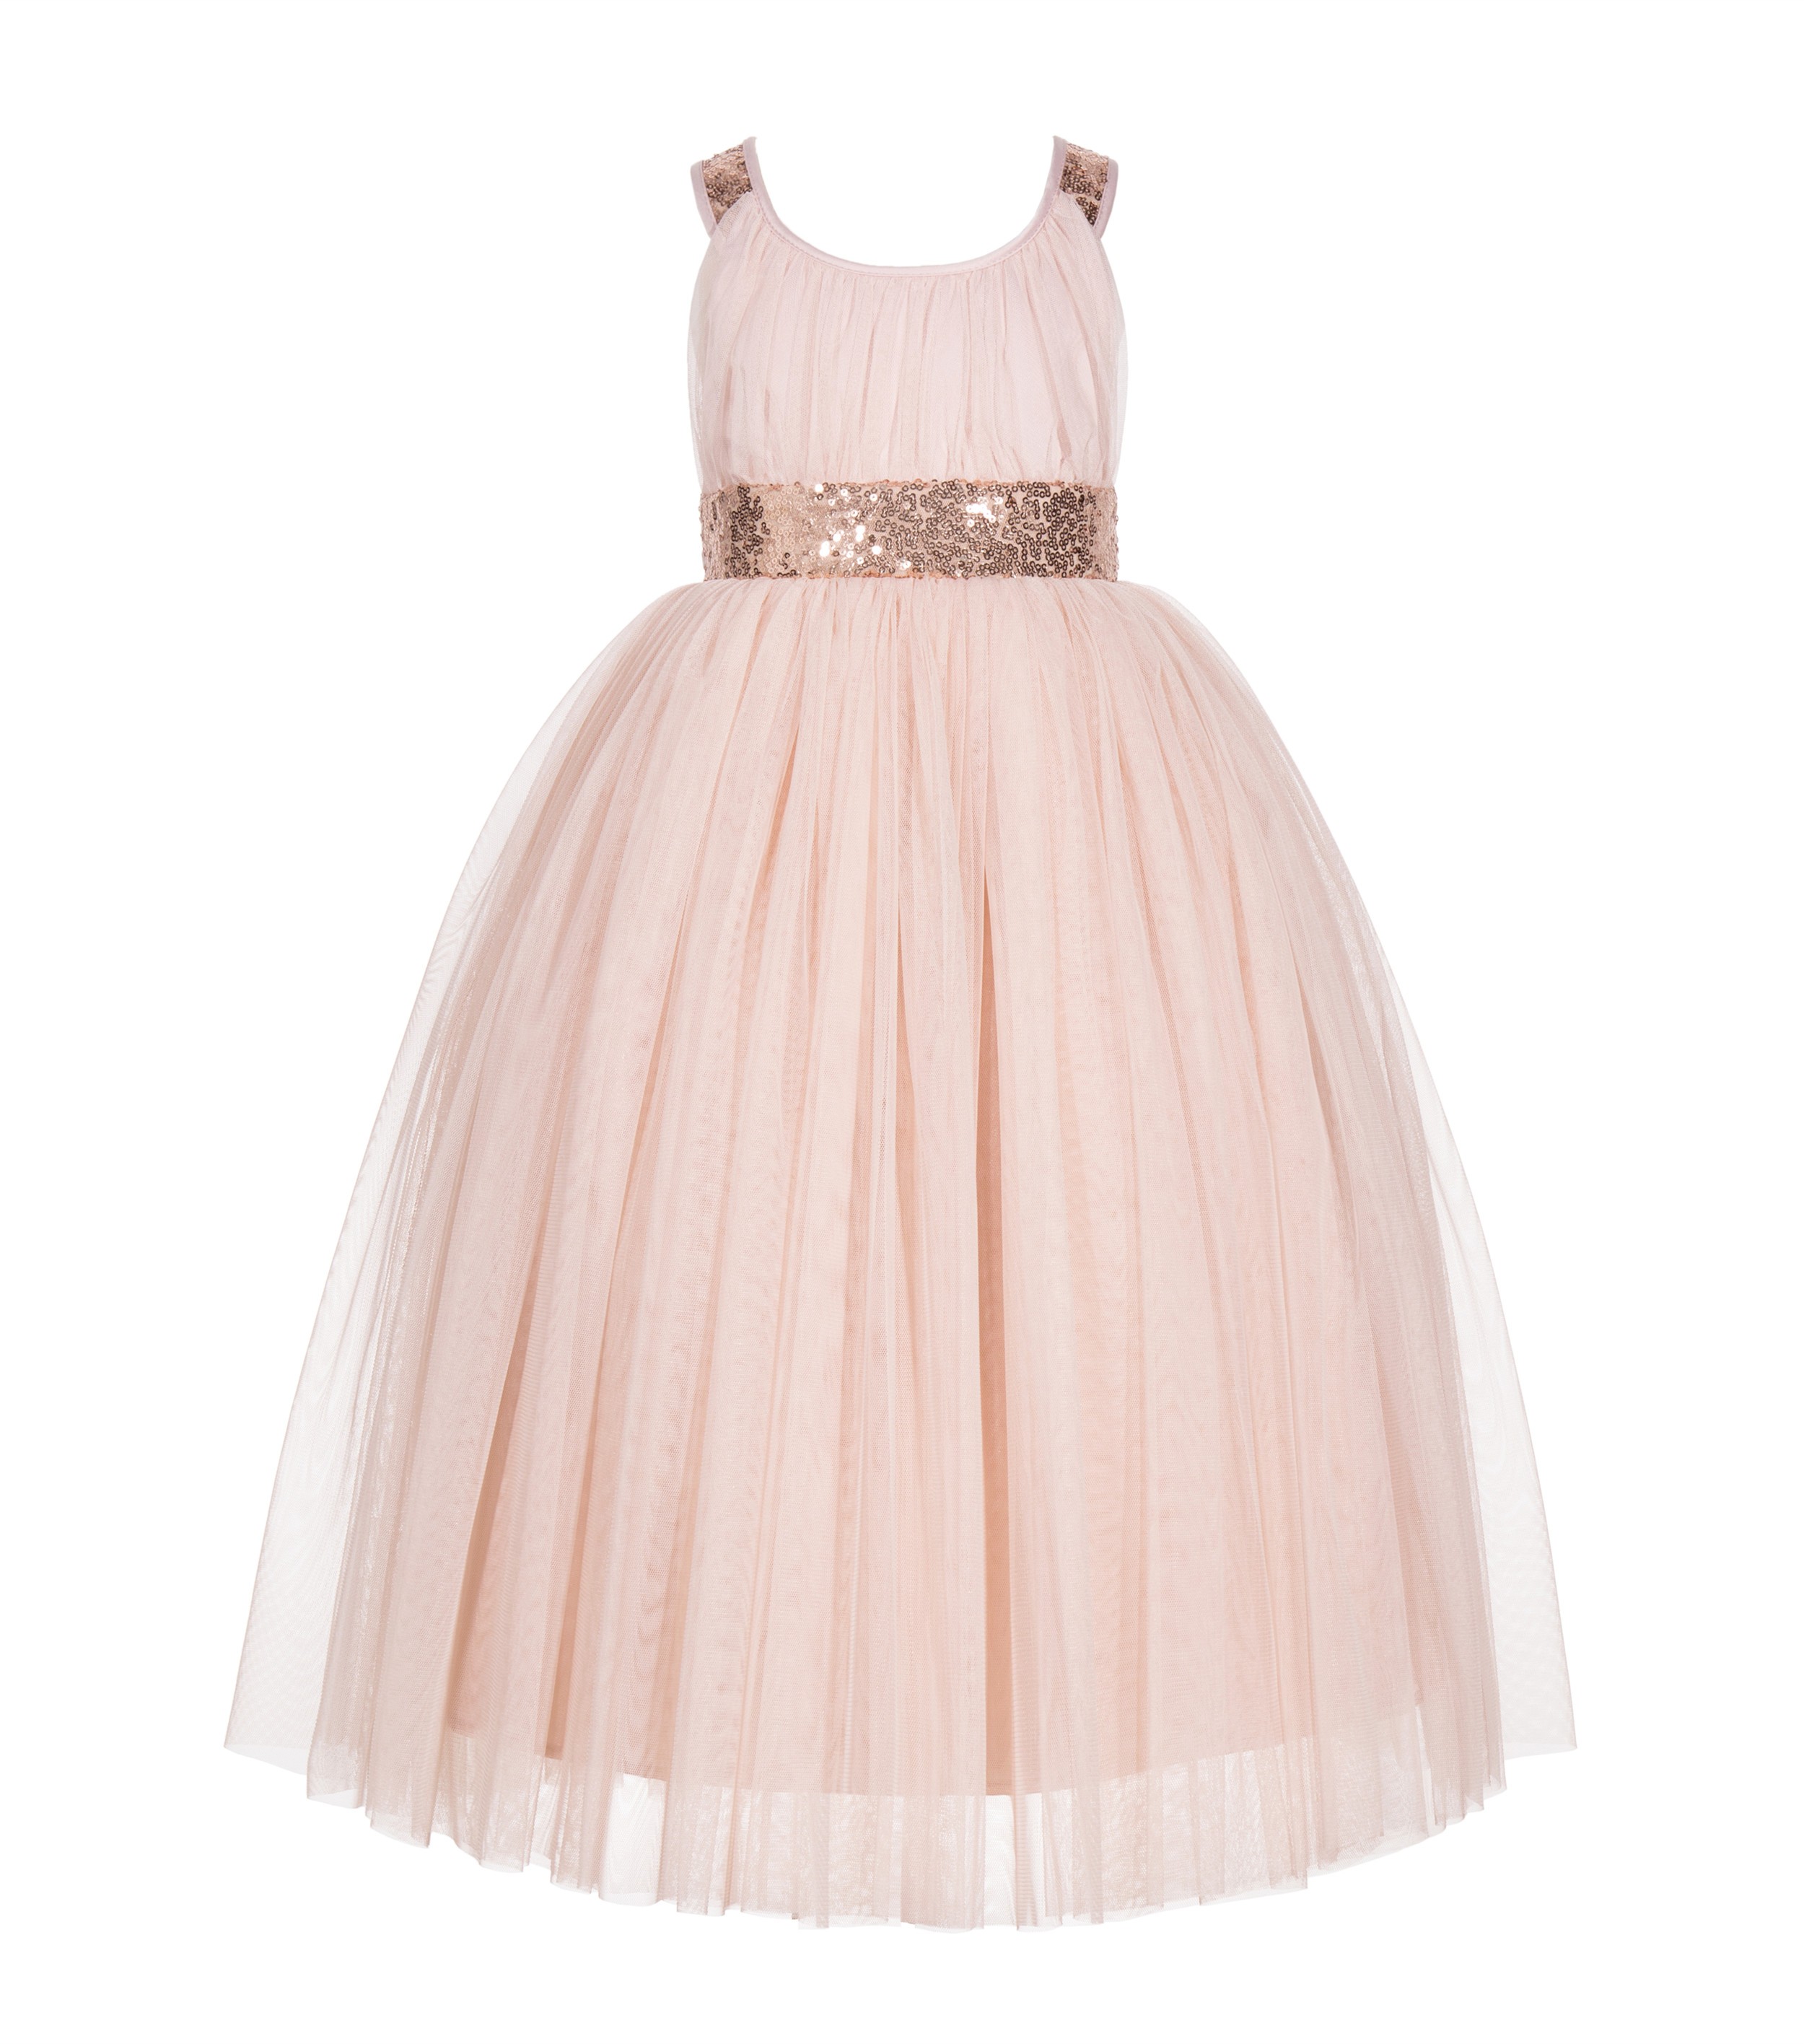 Rose Gold / Blush Pink Sequin Tulle Dress Crossed Straps A-Line Flower Girl Dress 173